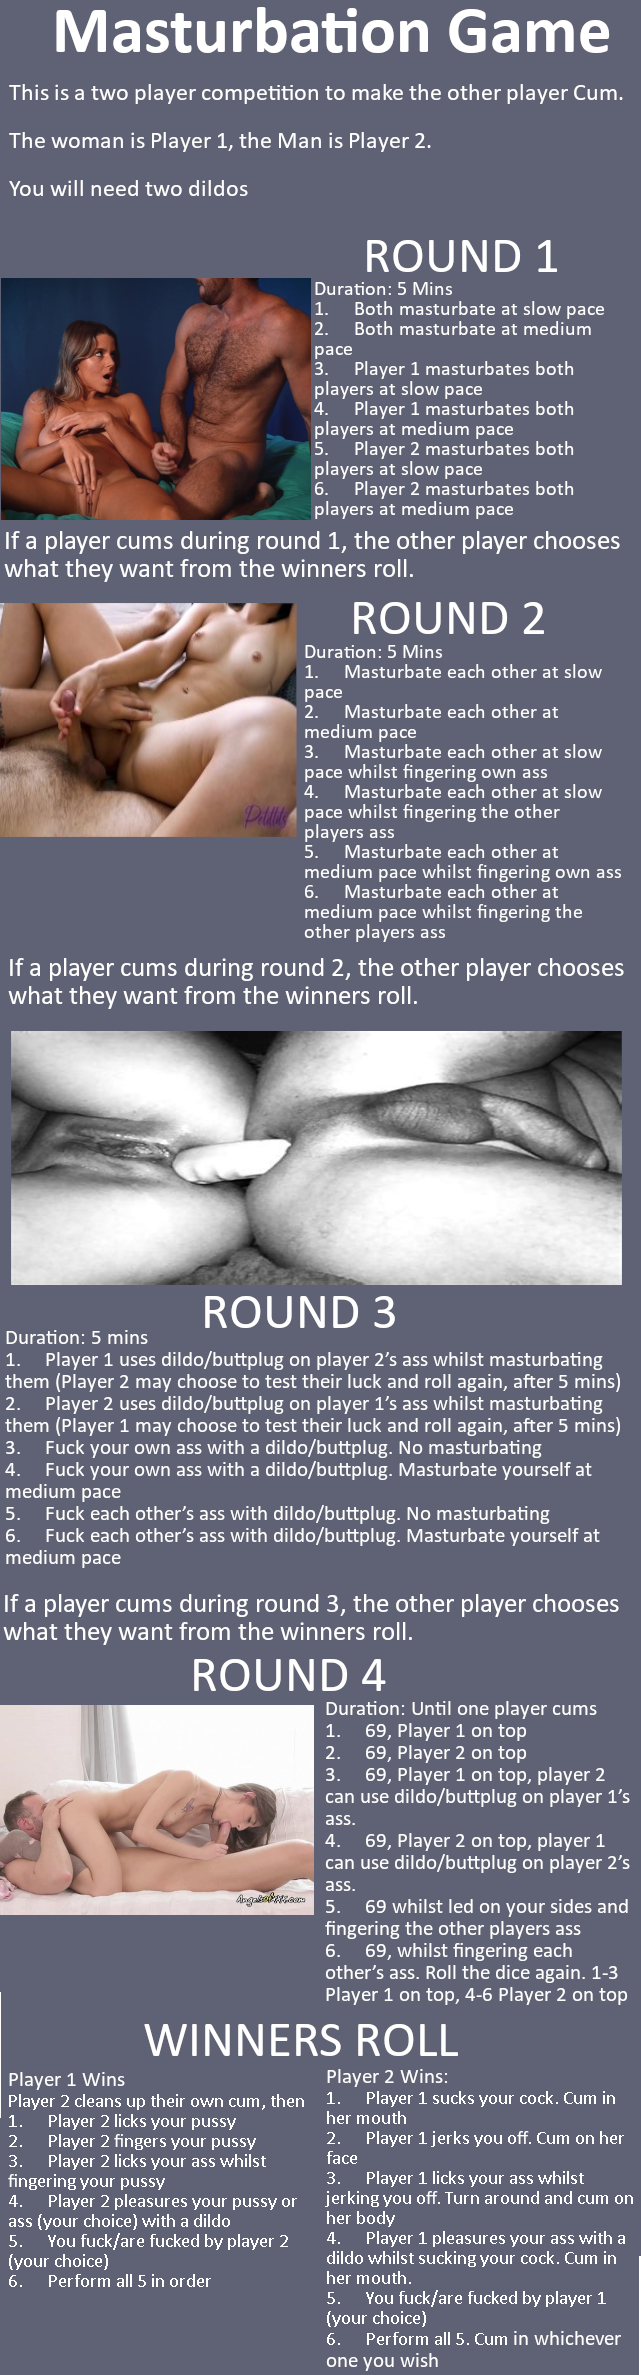 Masturbation Games Male